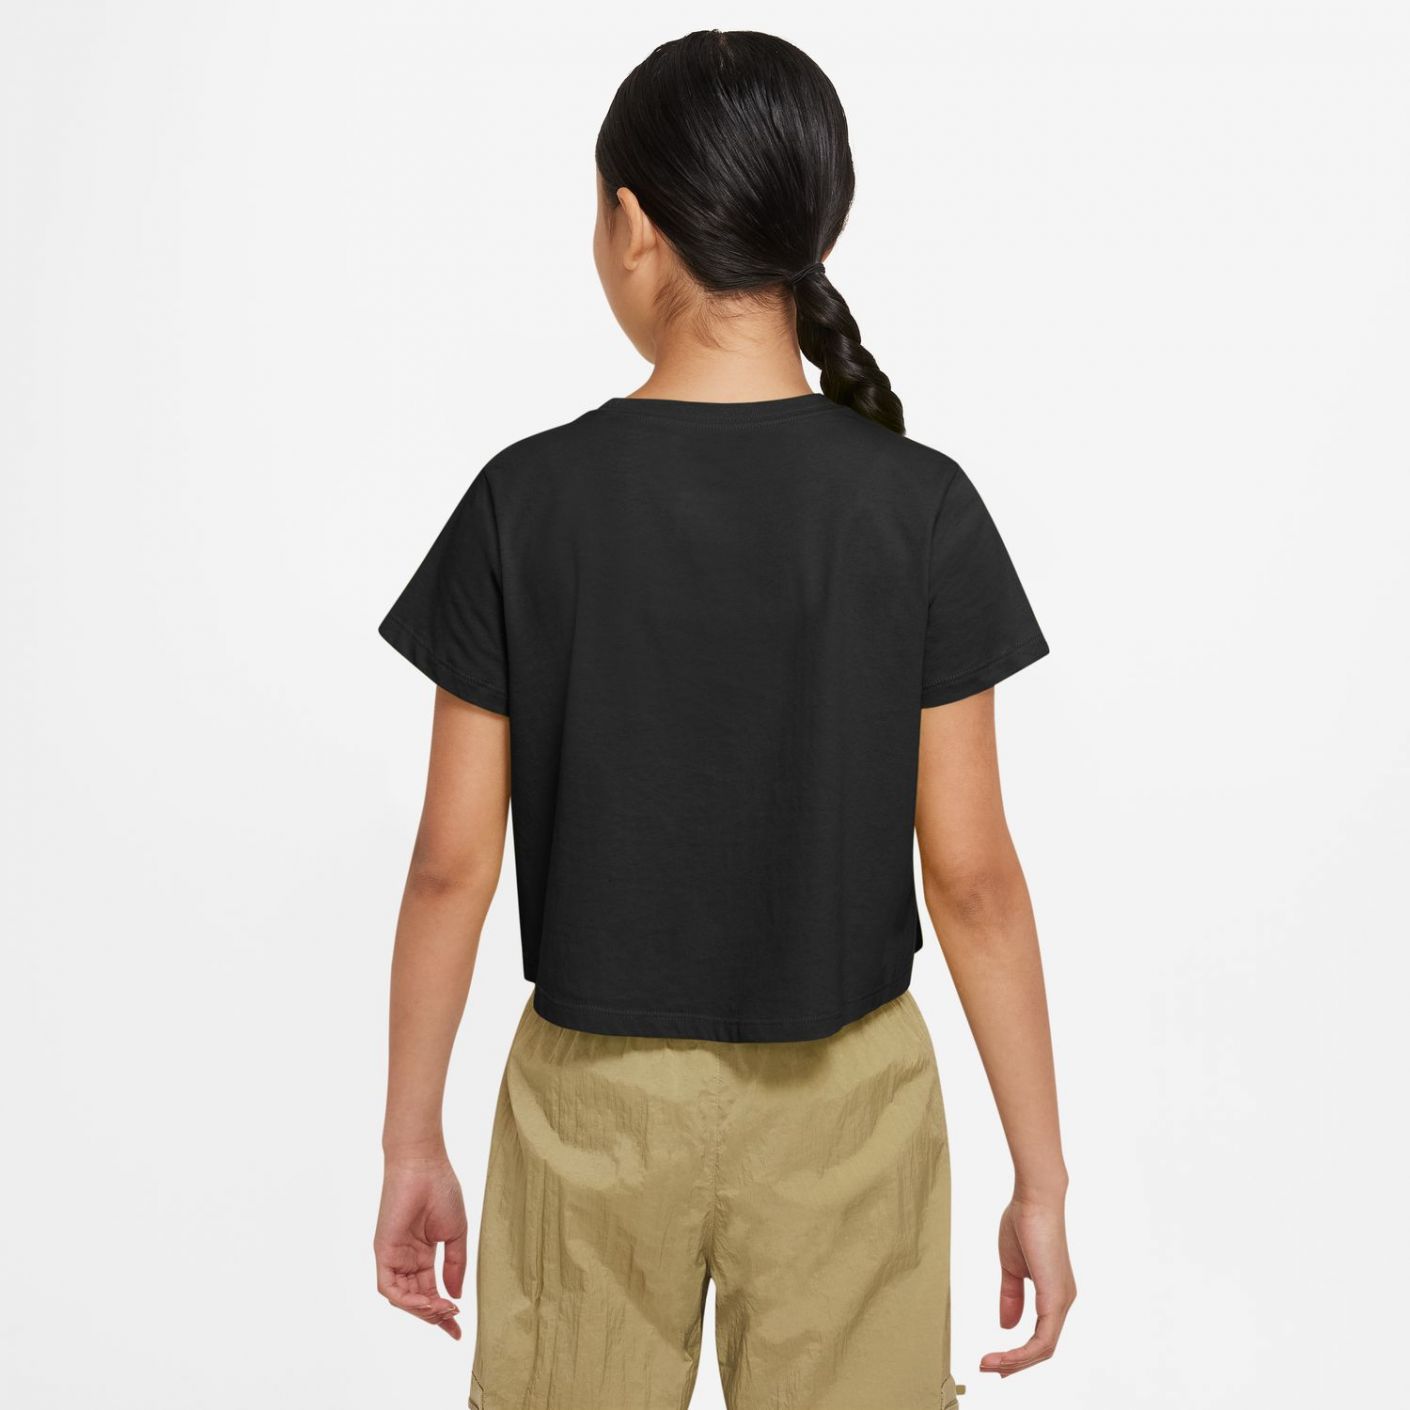 Nike T-Shirt Sportswear Black/White for Girls